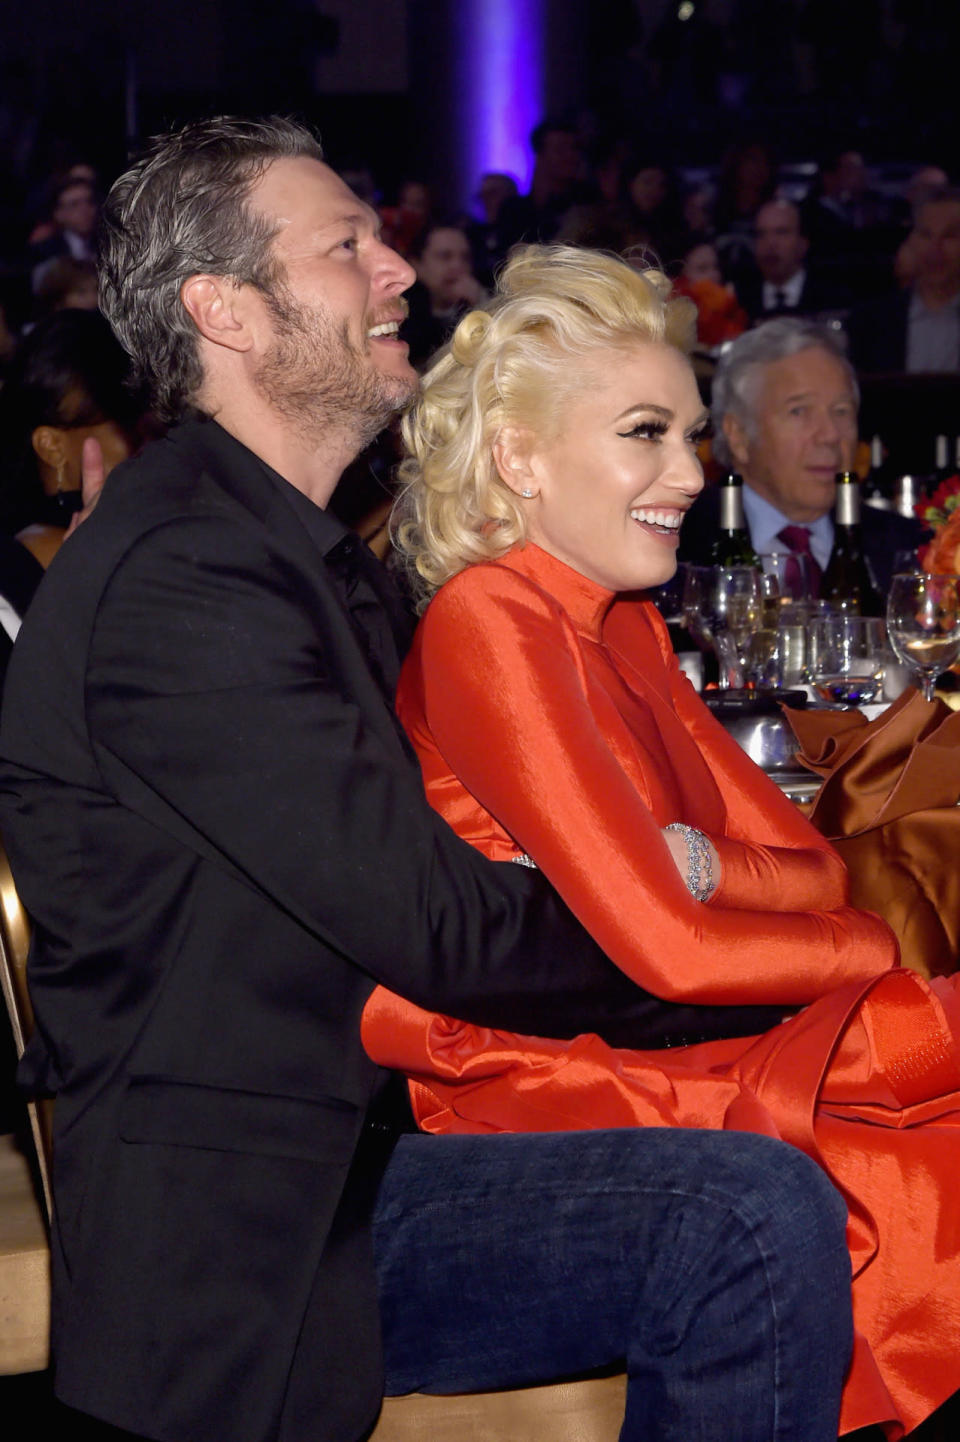 Blake Shelton and Gwen Stefani snuggle at Clive Davis’s Pre-Grammy party. 